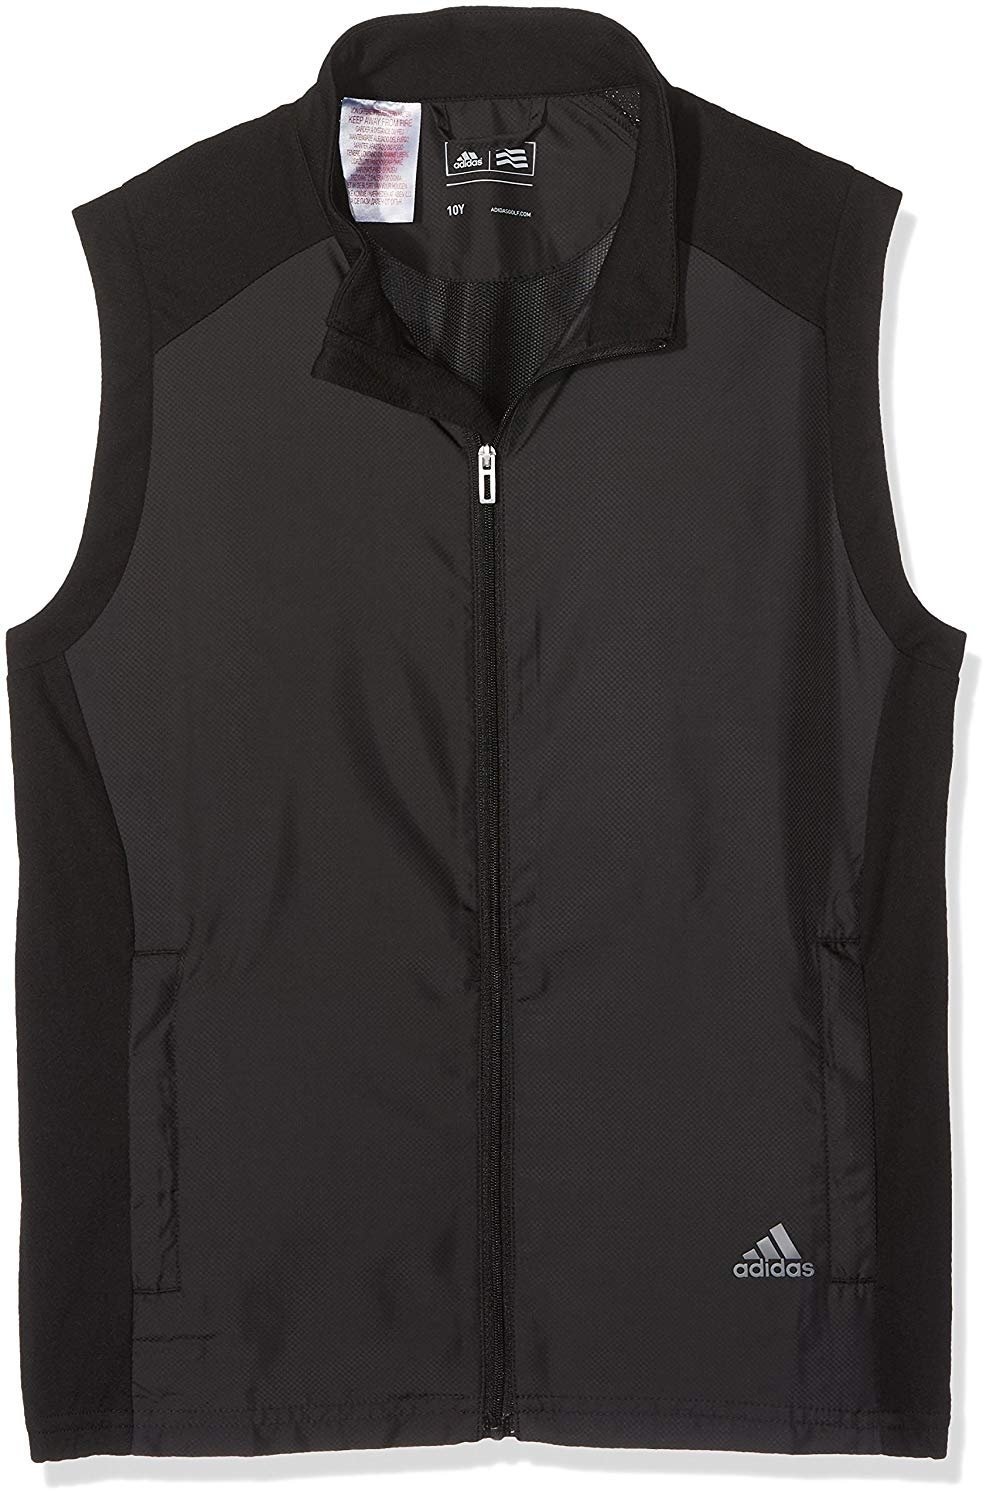 Жилетка Adidas Performance Junior Vest Black 16Y